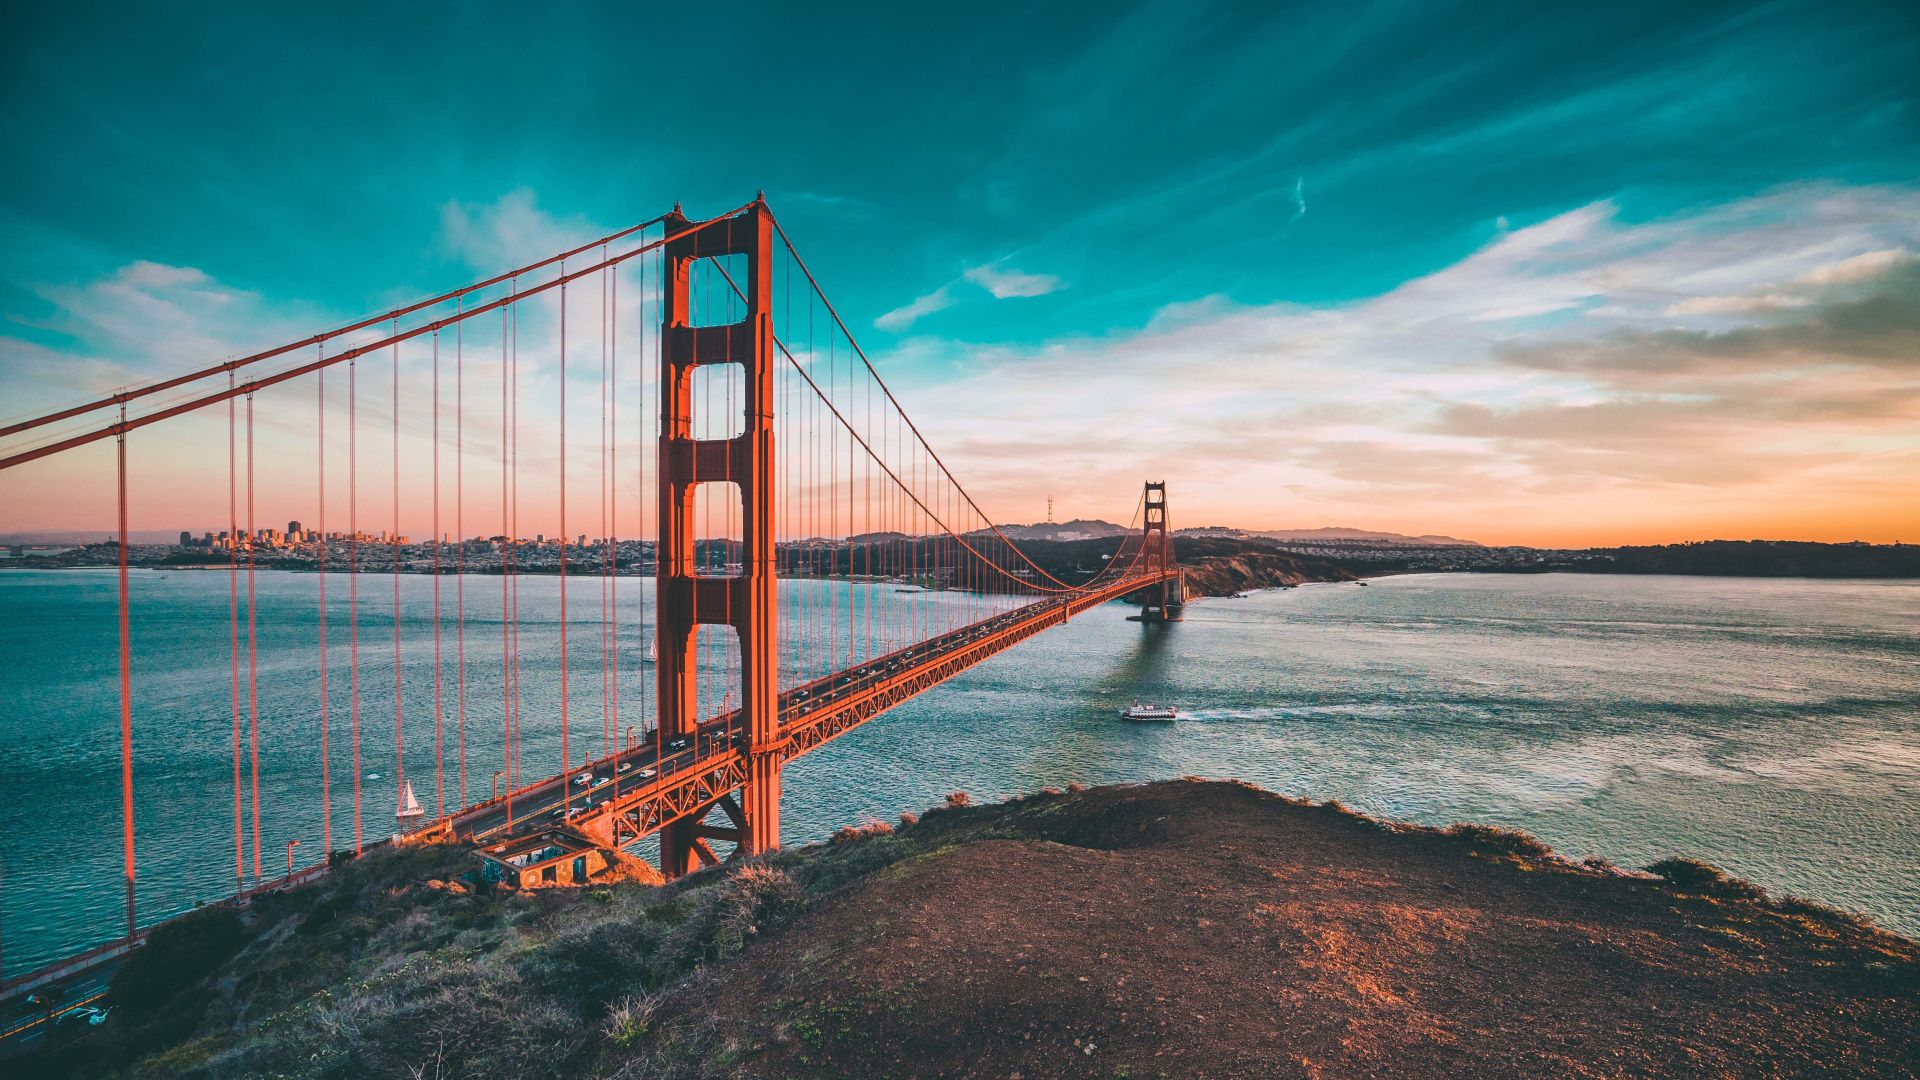 Golden Gate Bridge Over A Body Of Water